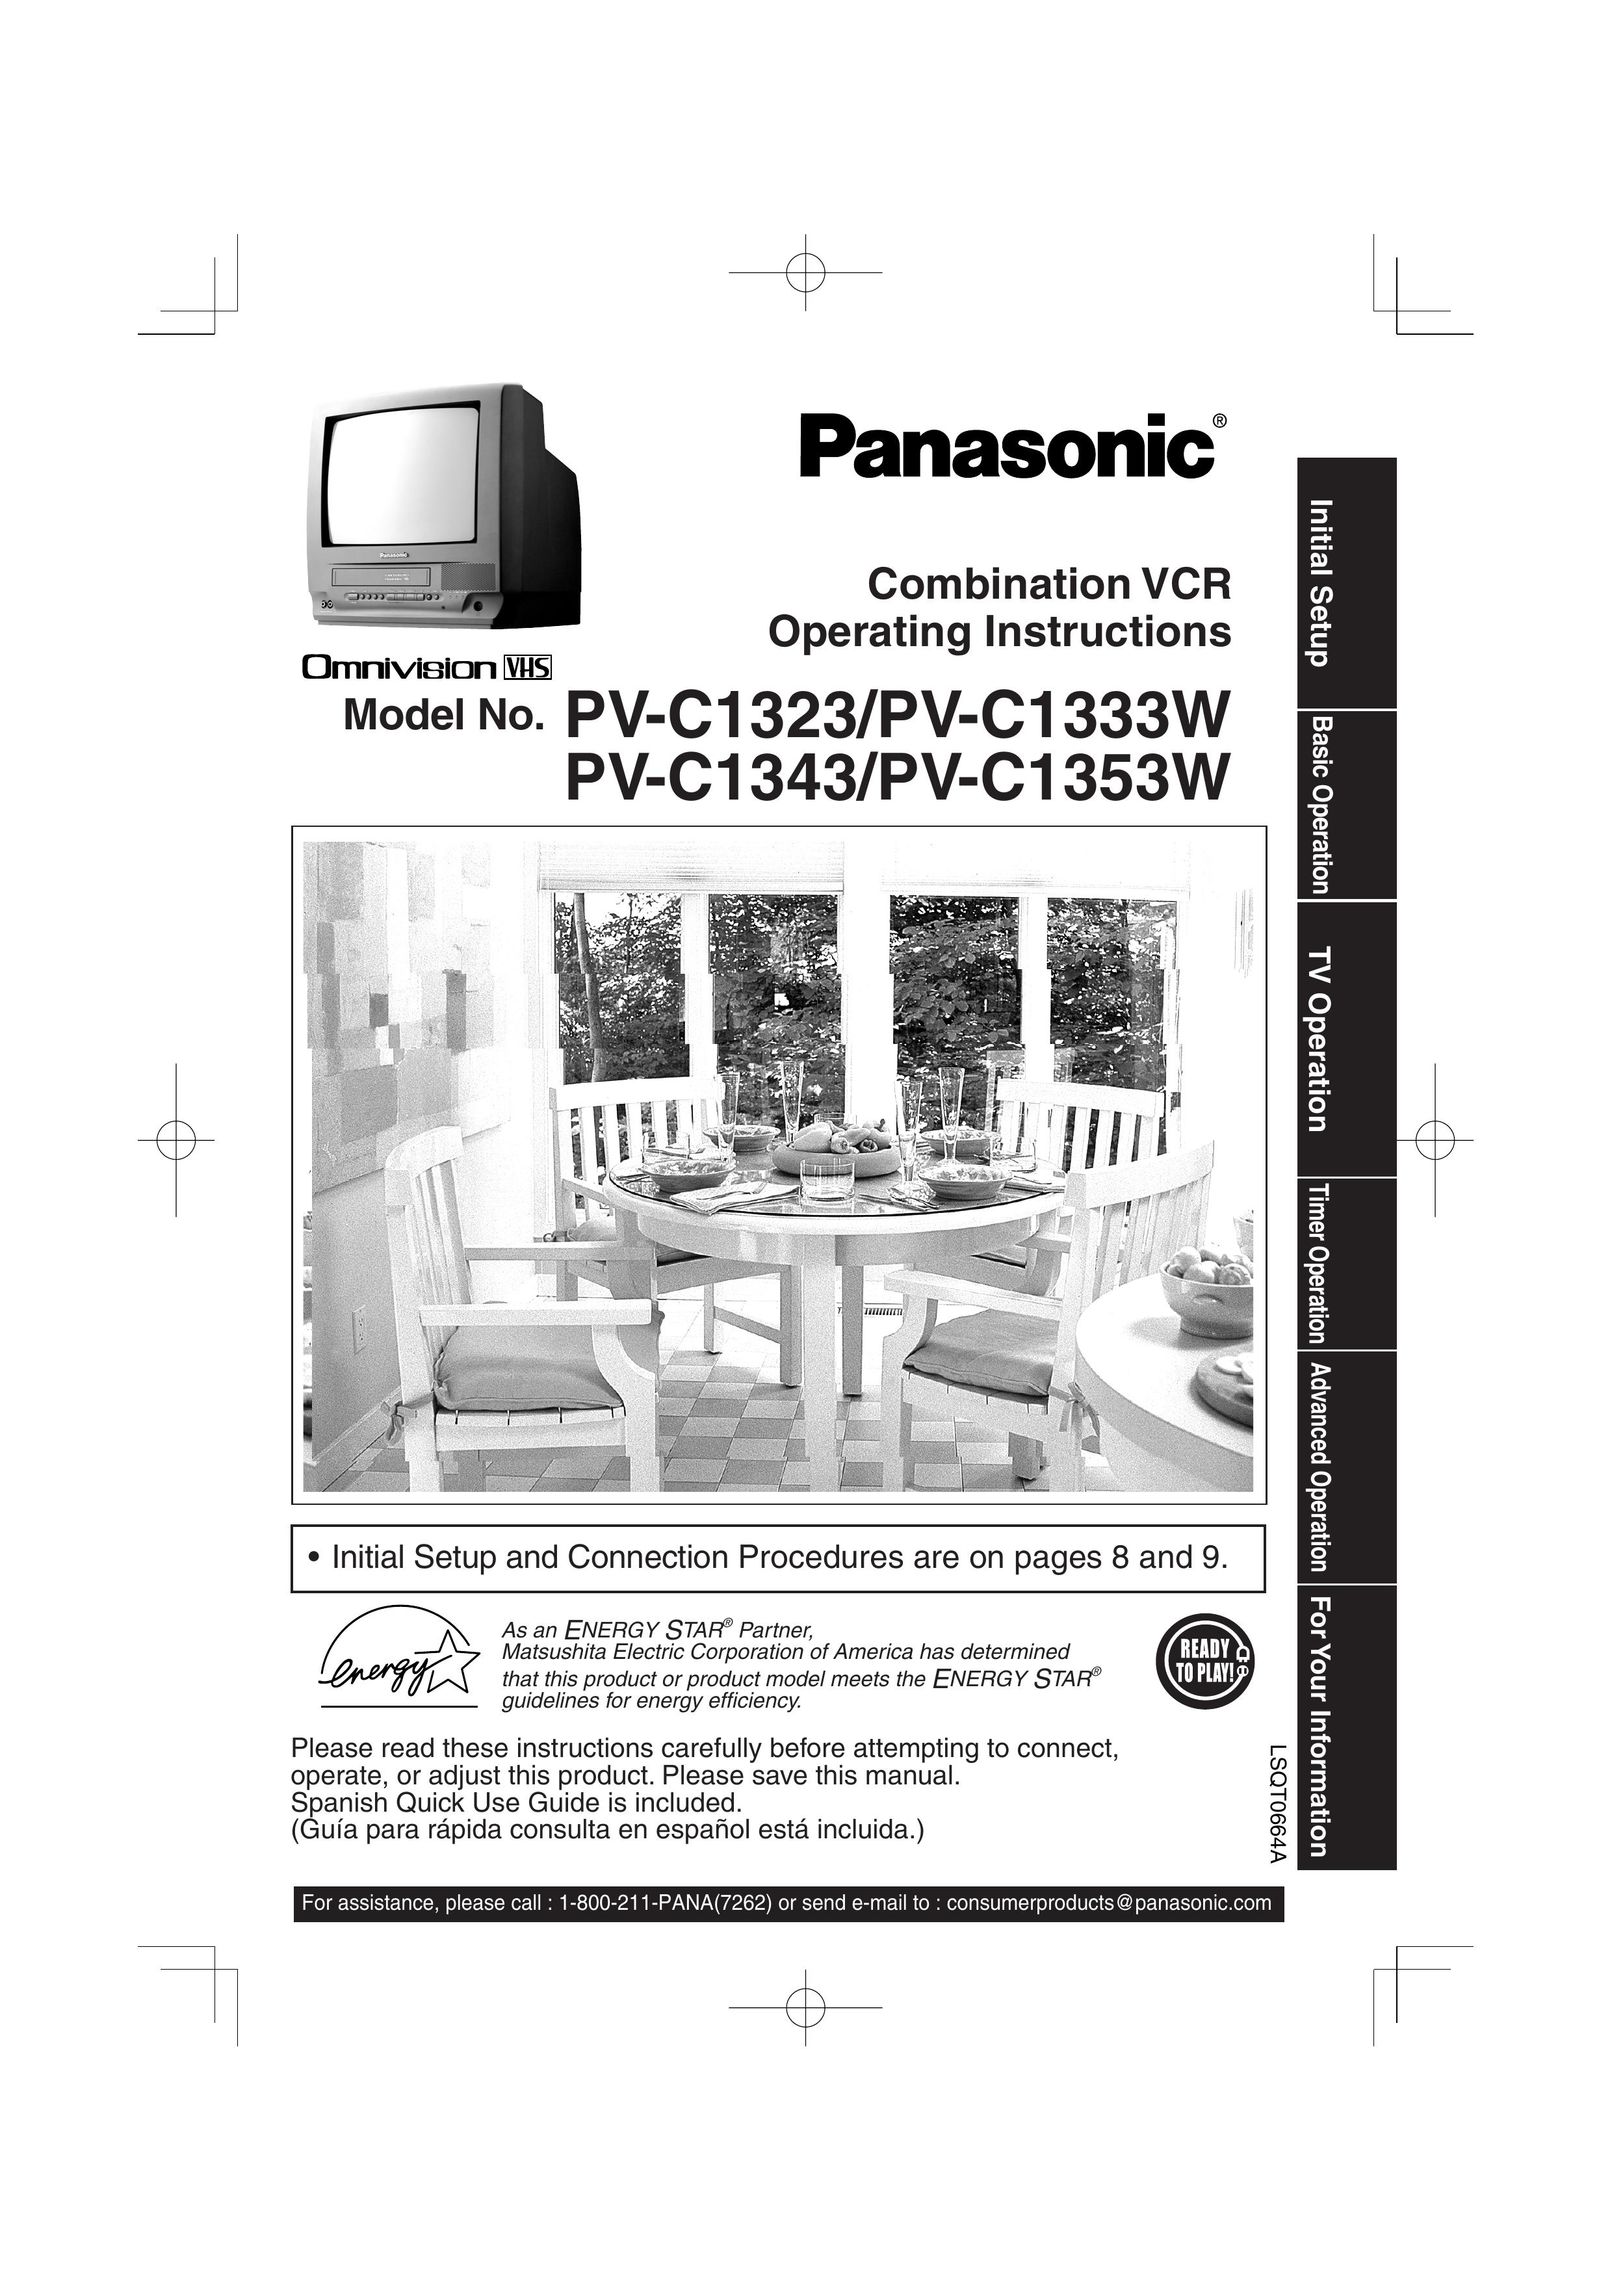 Panasonic PV-C1333W TV VCR Combo User Manual